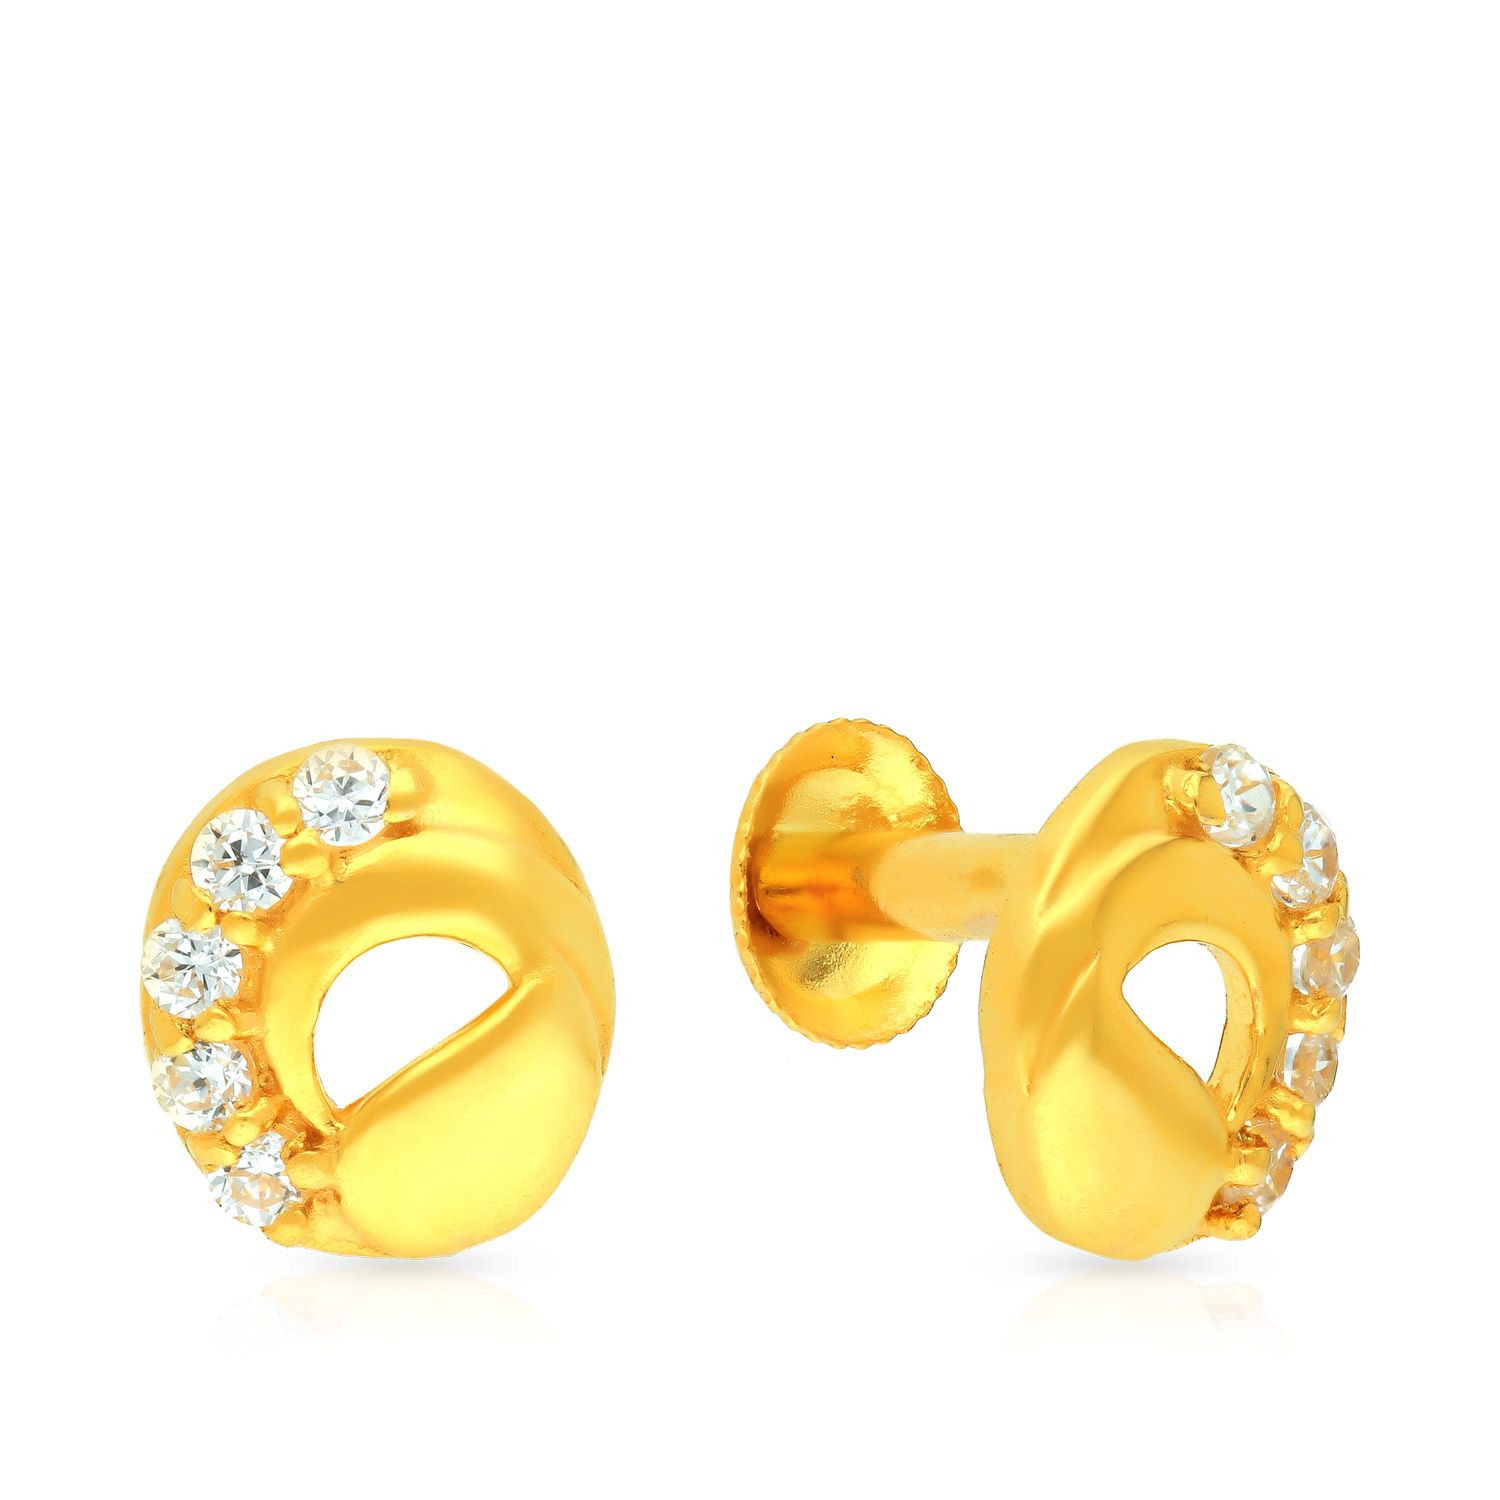 Details 76+ malabar gold qatar earrings collections best